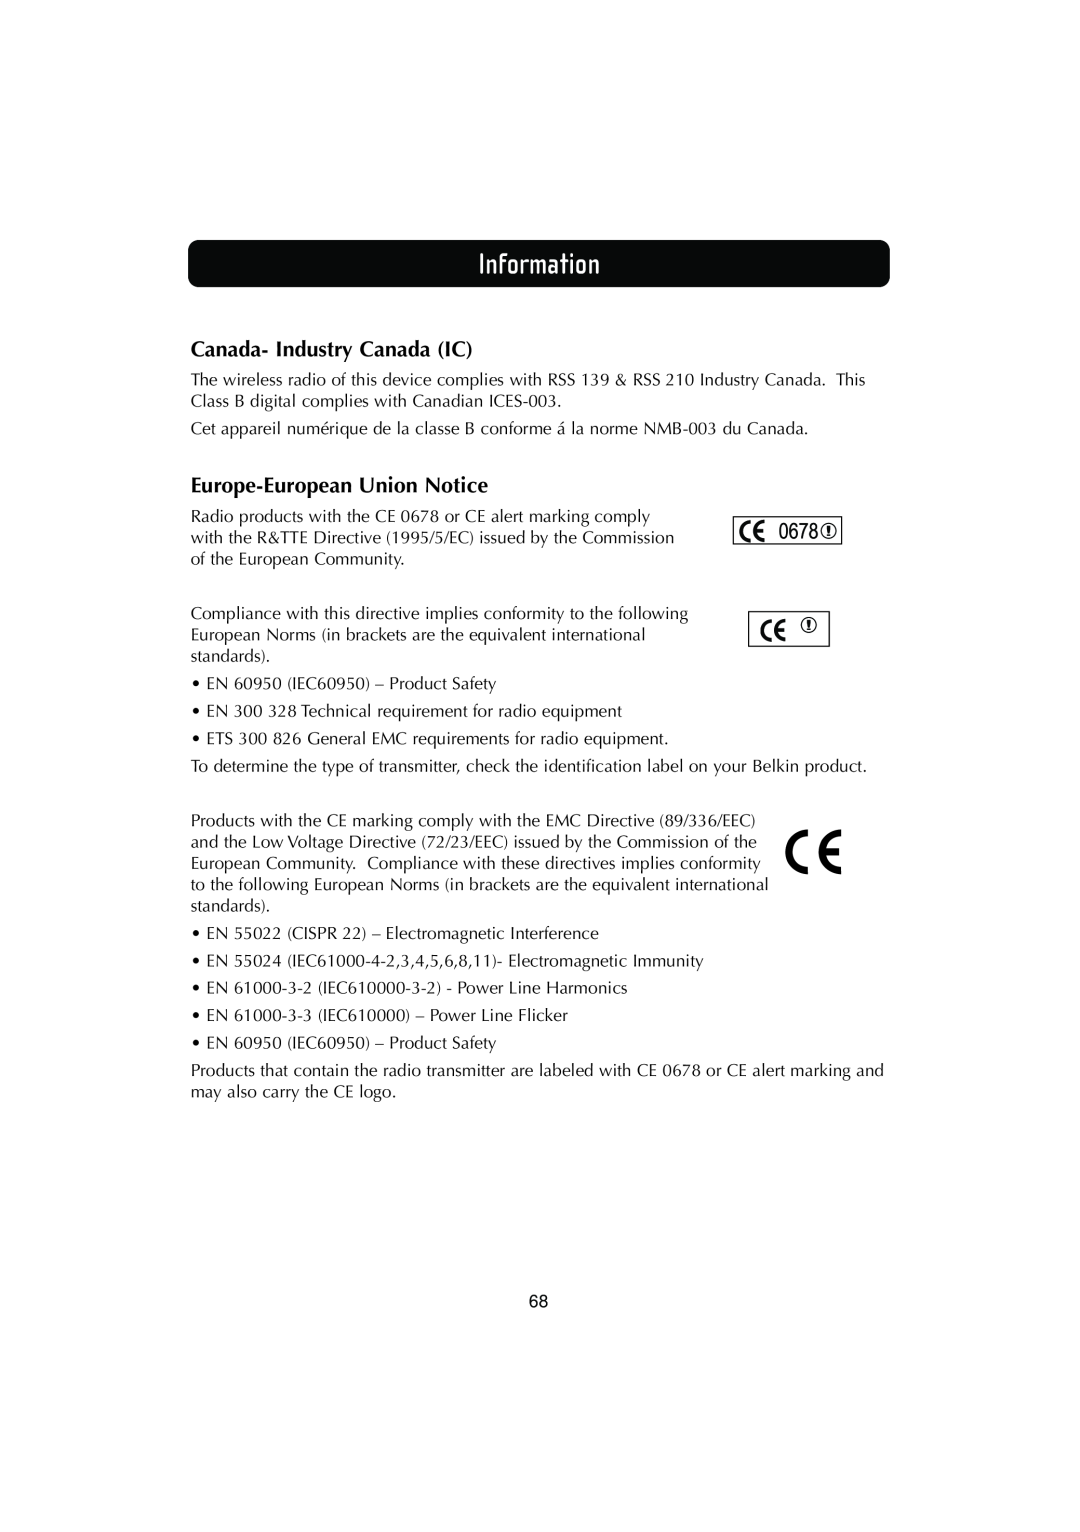 Belkin F506230-3 user manual Information, Canada- Industry Canada IC, Europe-European Union Notice 